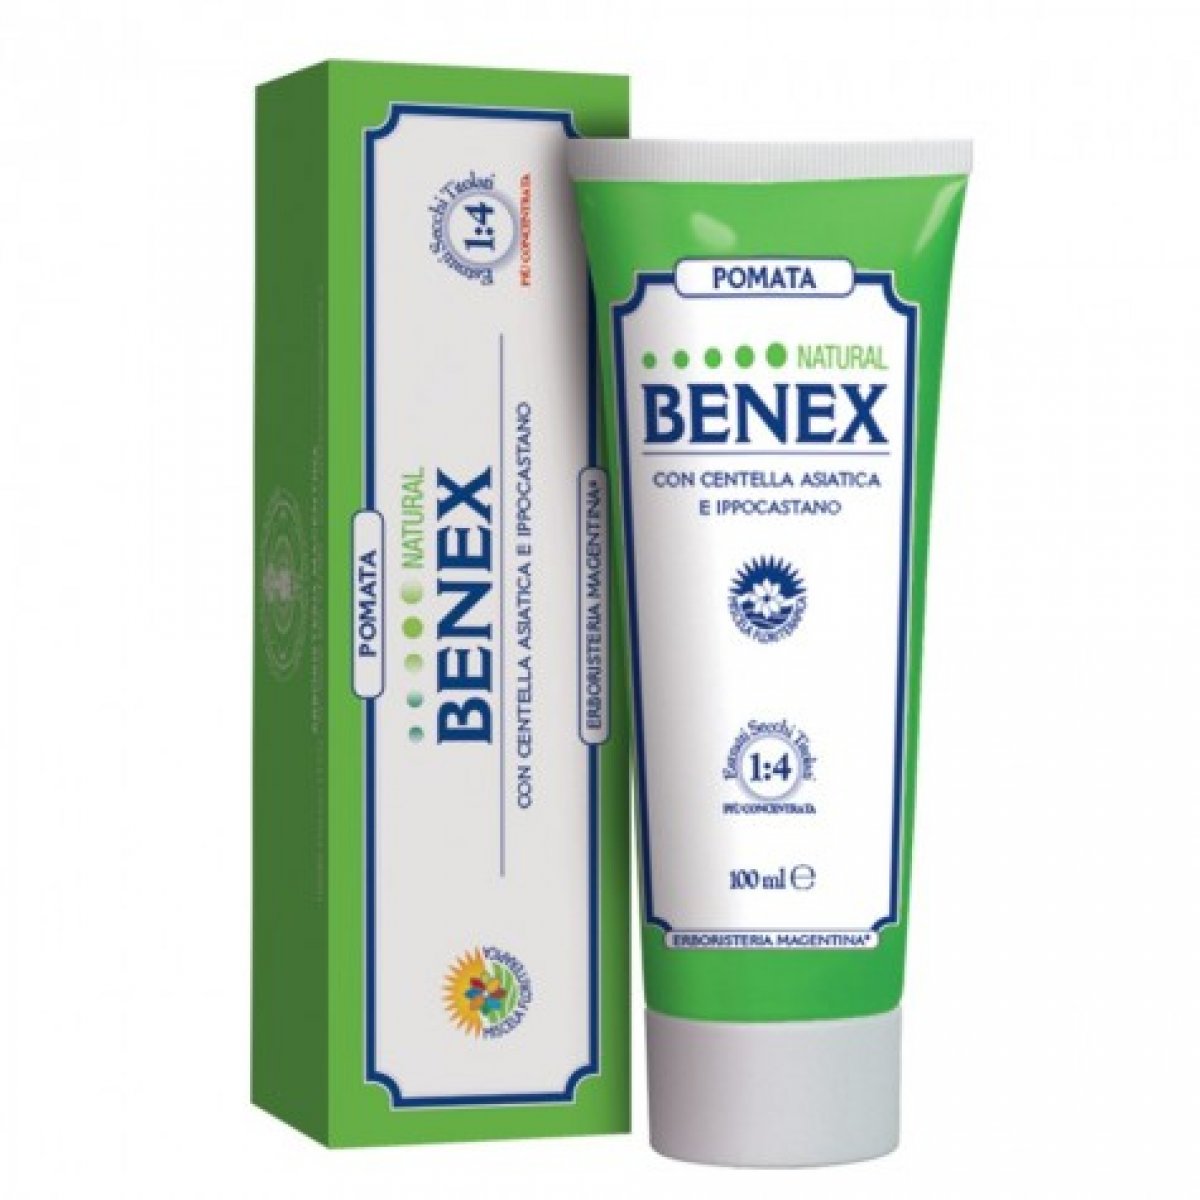 Natural Benex Pomata 100 ml Erboristeria Magentina